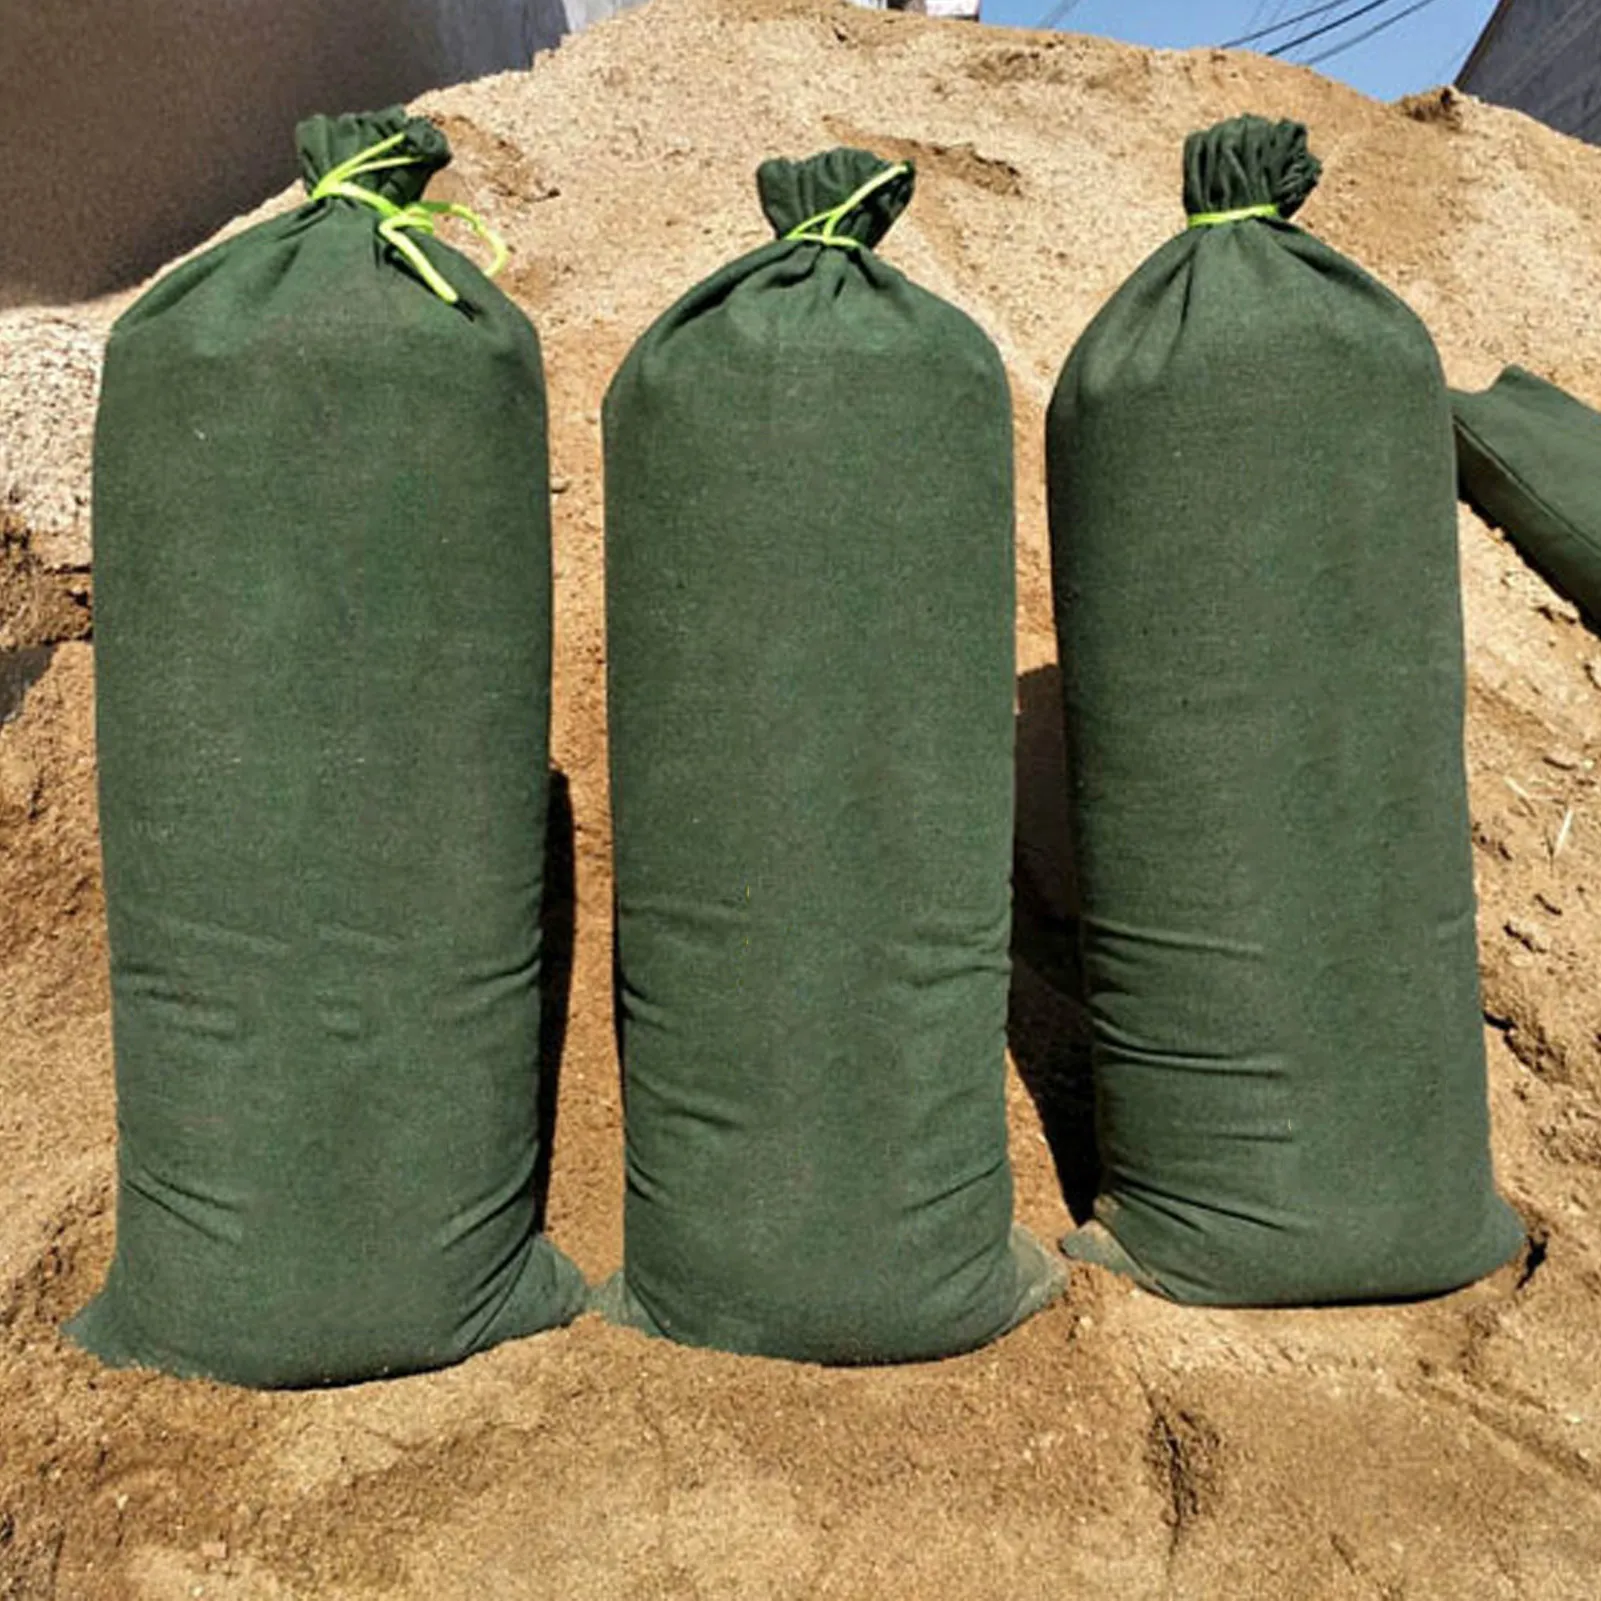 Sandbag Flood Resistant Waterproof Heavy Duty Sand Bags Canvas Thickened Sandbag with Drawstring Closure Ties 